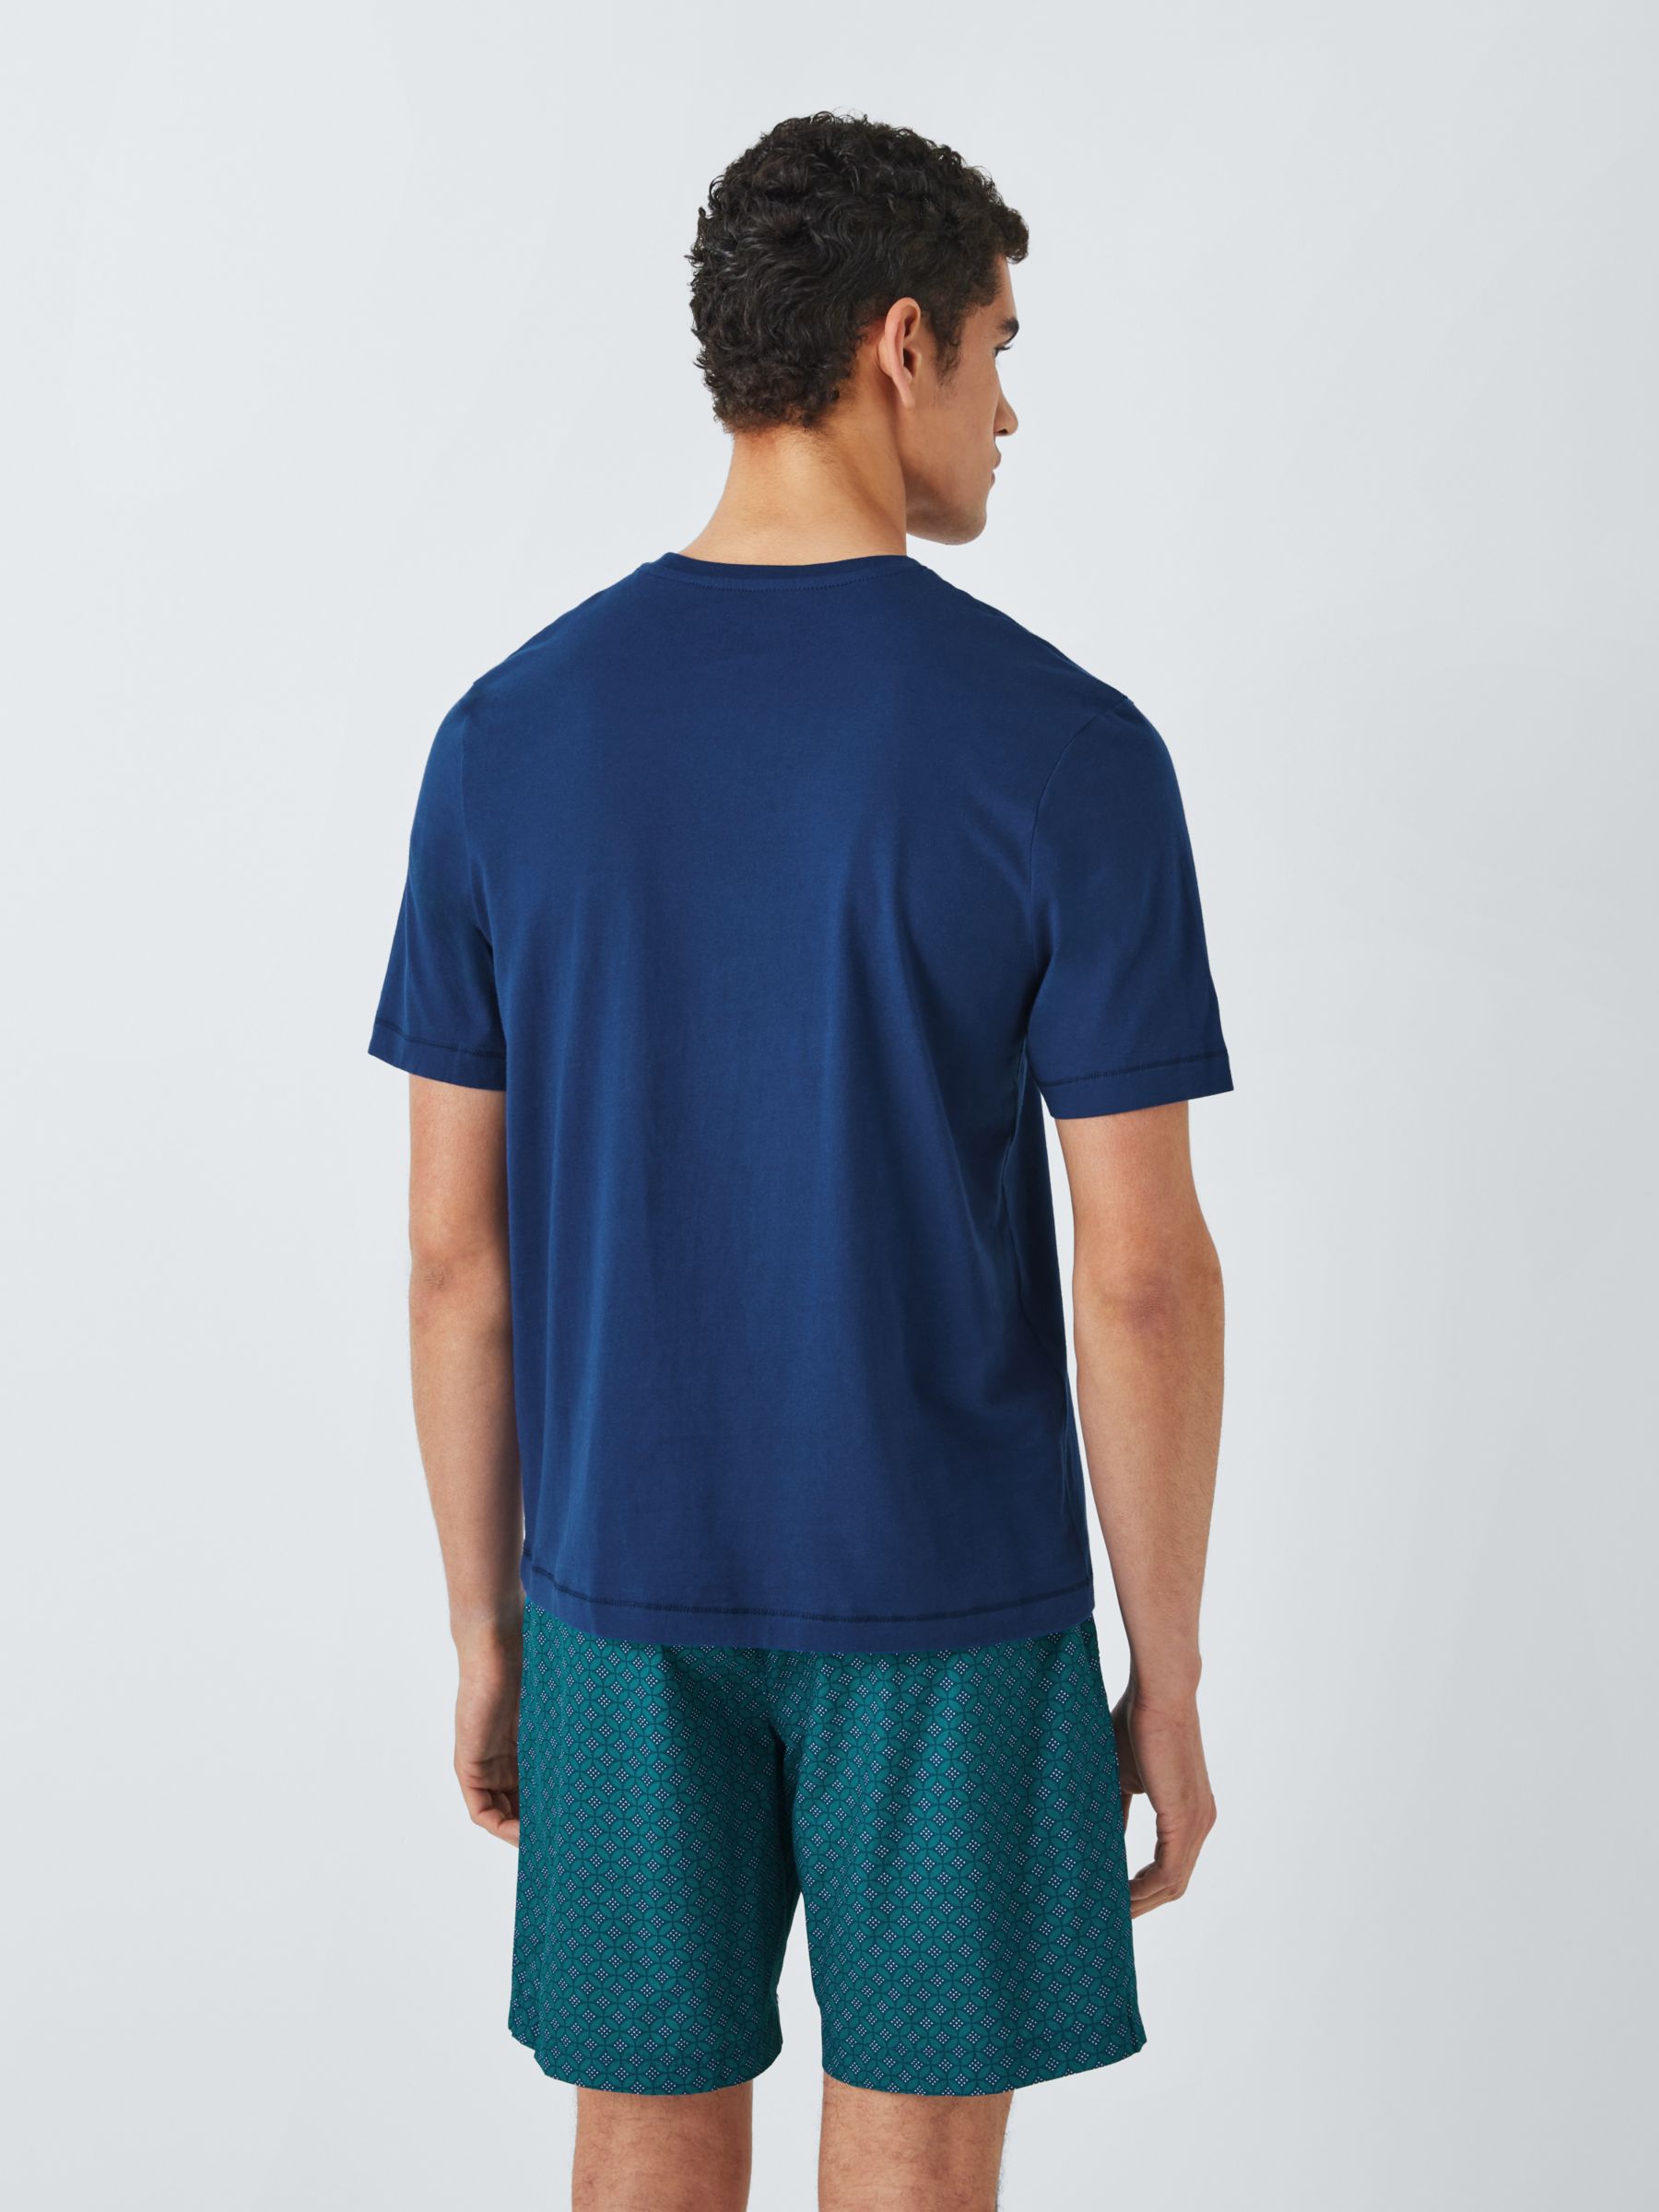 John Lewis Tile Shorts Pyjama Set, Blue, L